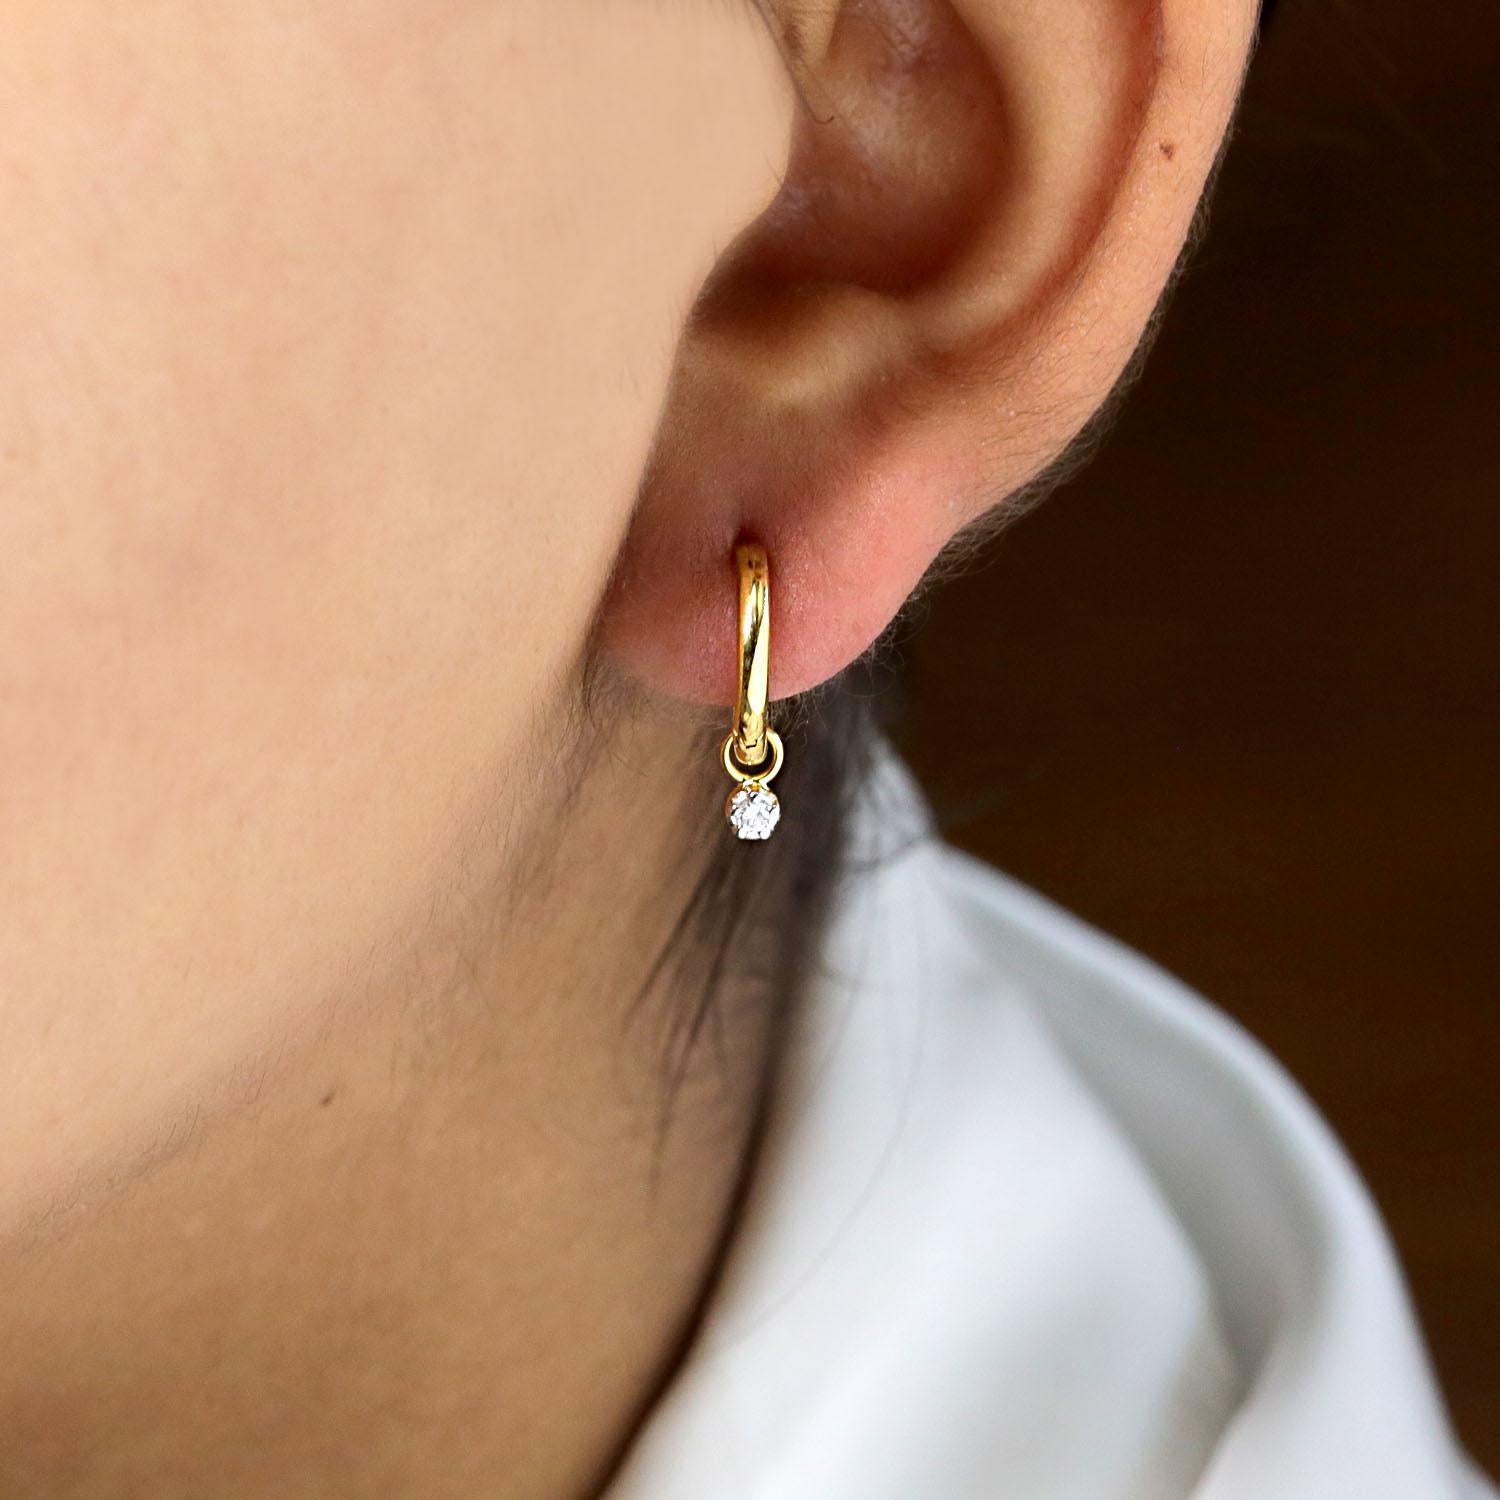 Women's 14k gold Diamond Earring with 0.07 carats diamond